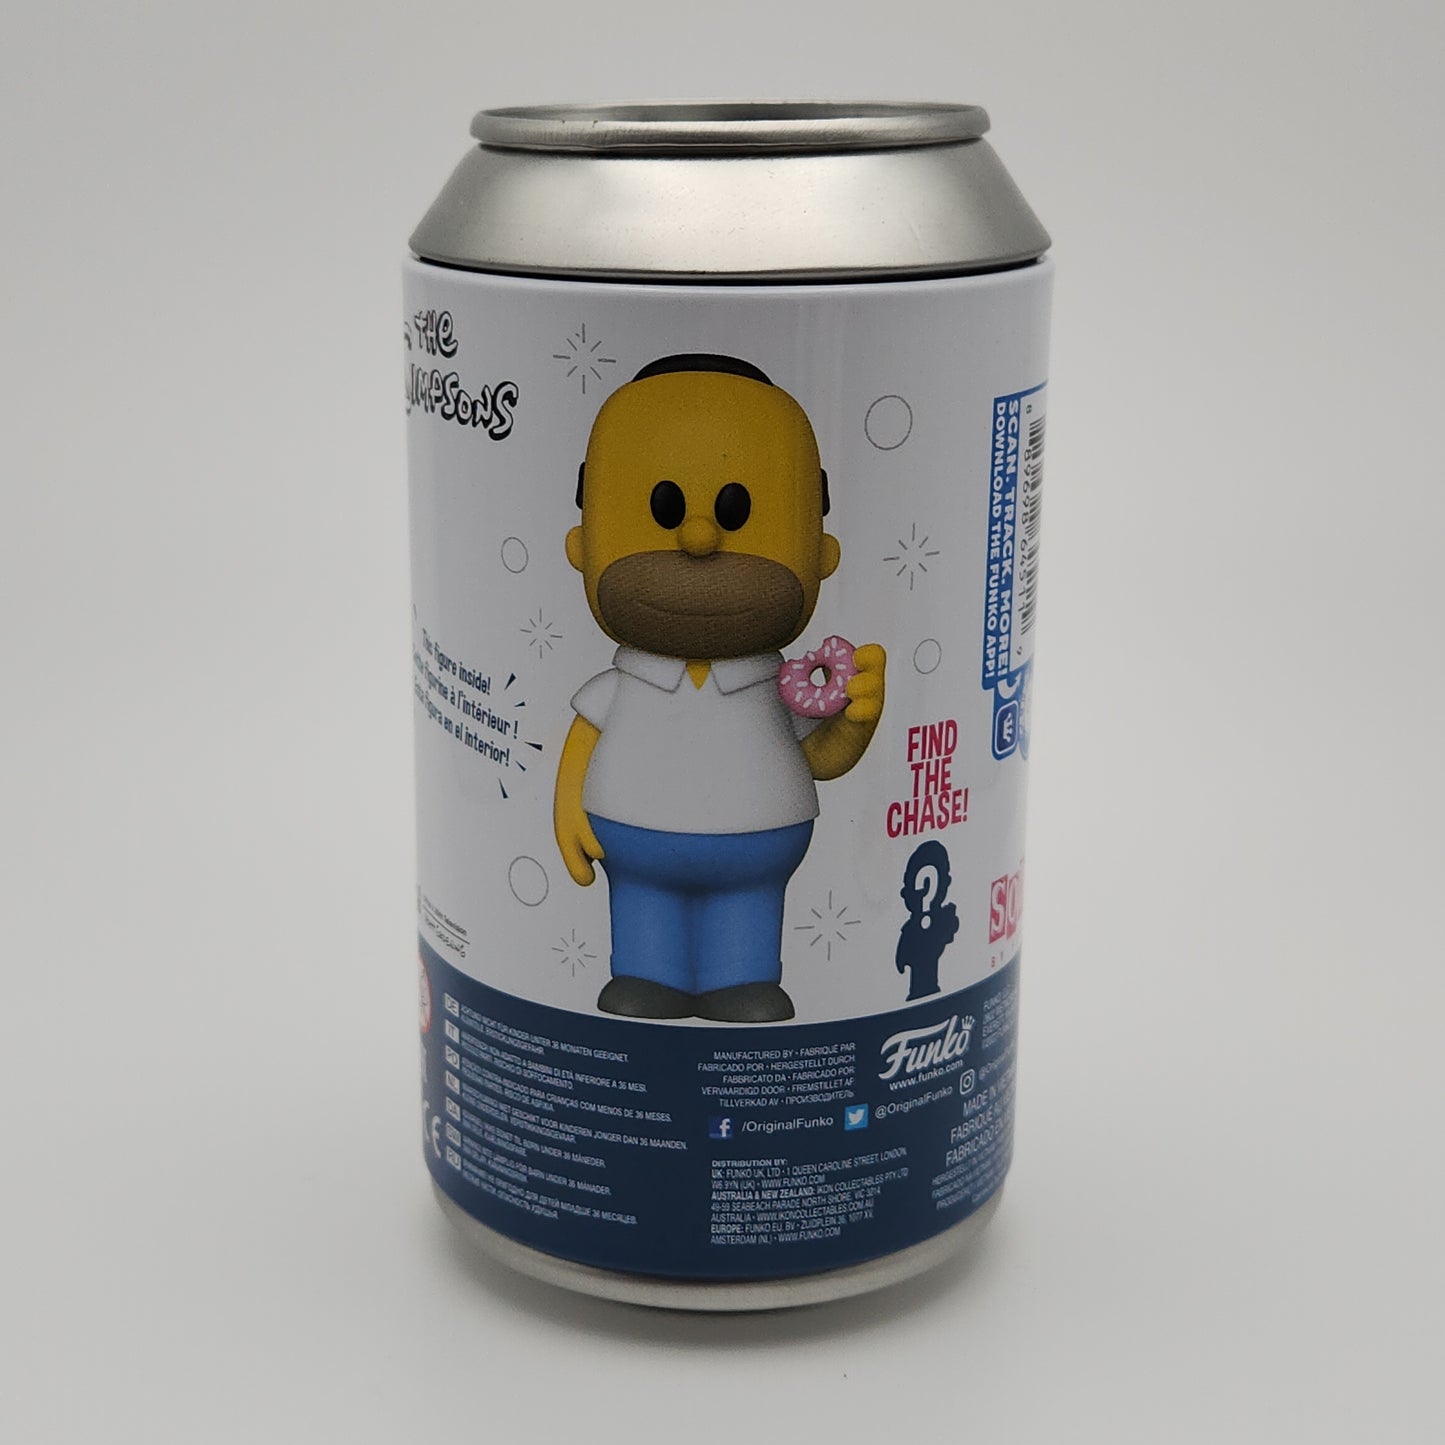 Funko Soda- Homer Simpson